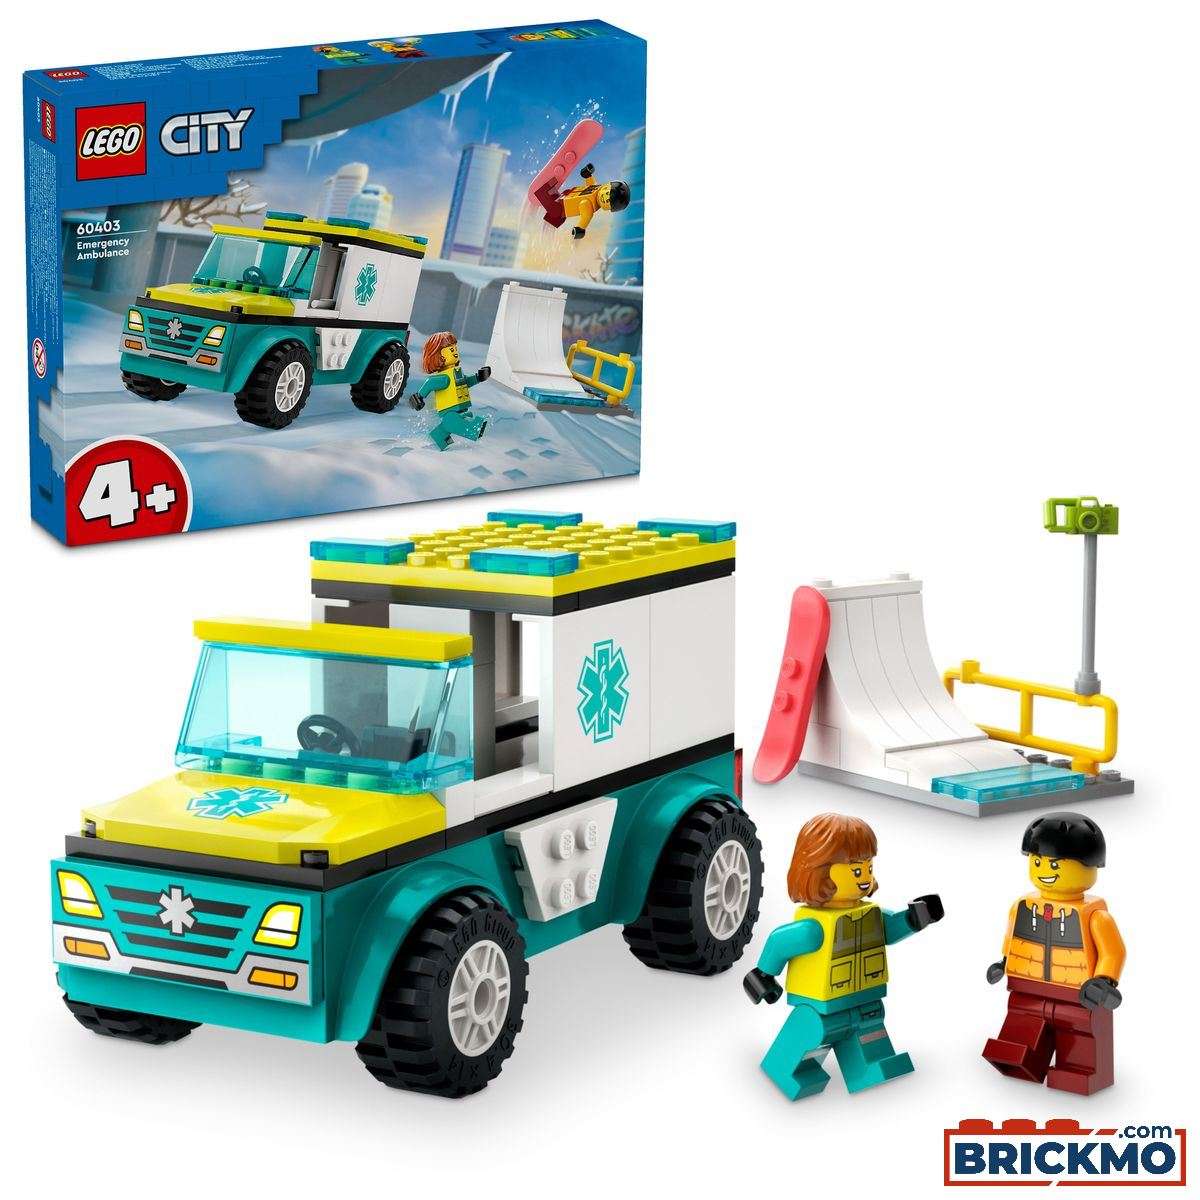 LEGO City 60403 Ambulance en snowboarder 60403